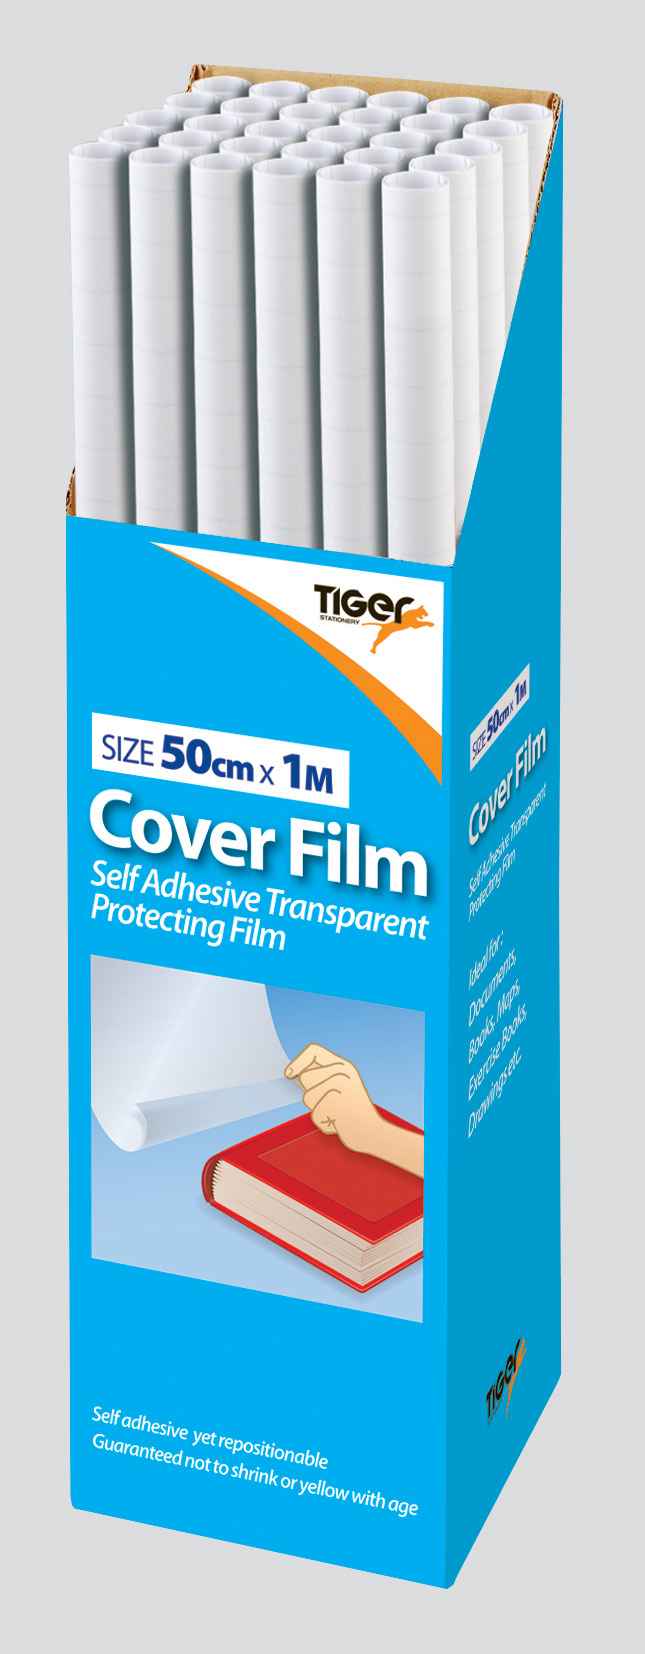 Tiger 50cm x 1m Book Cover Film